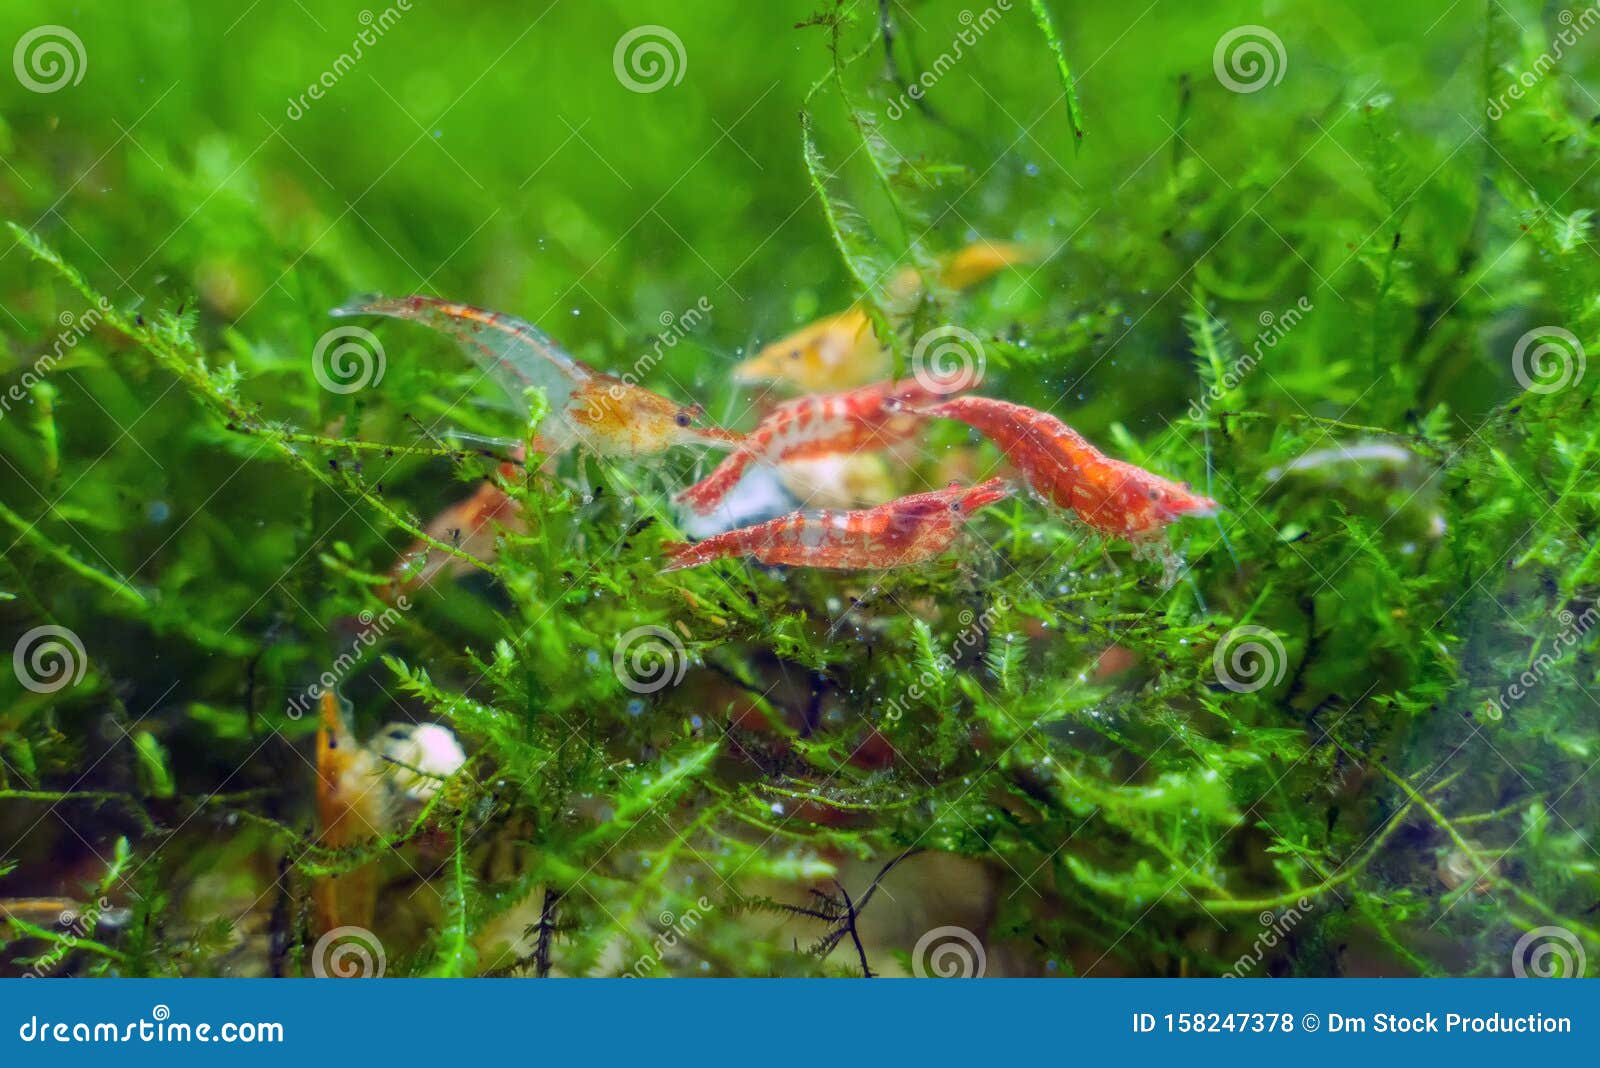 freshwater shrimps